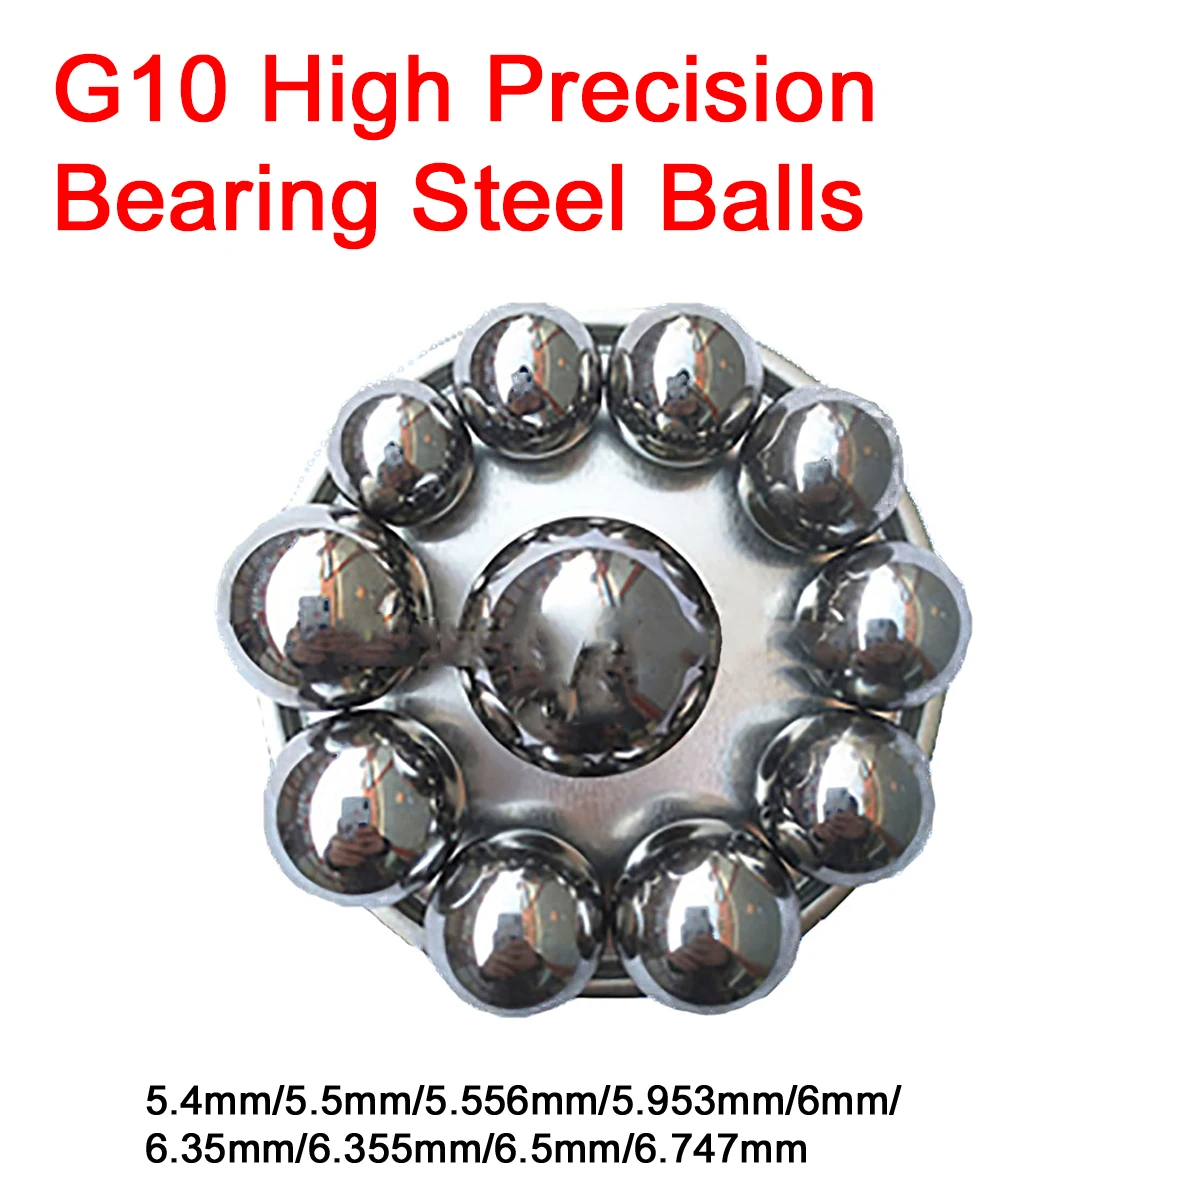 

100/200/500Pcs G10 Grade High Precision Bearing Steel Balls 5.4/5.5/5.556/5.953/6/6.35/6.355/6.5/6.747mm Chrome Bearing Steel